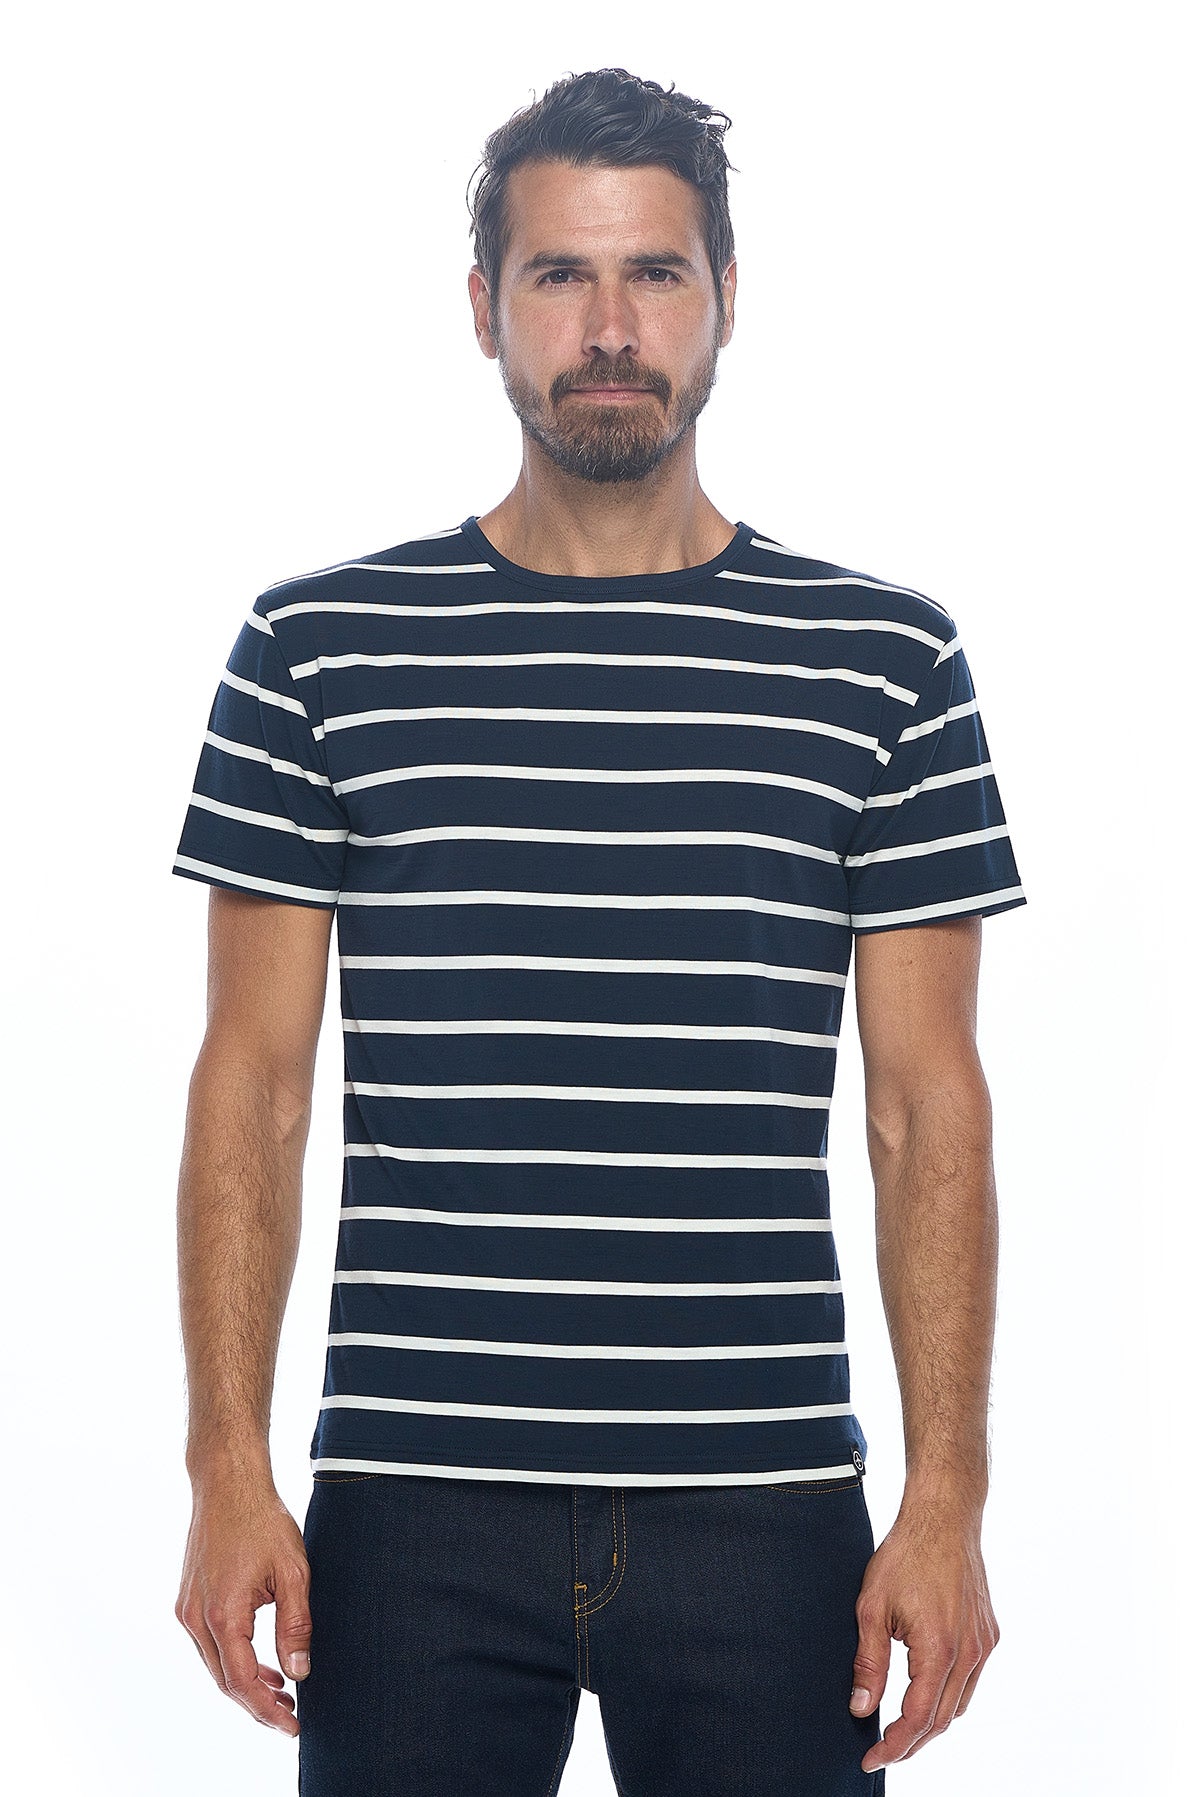 Meander Tog klinke Men's Merino Wool Travel T-Shirt | Breton Stripe | Made in the USA - Aviator